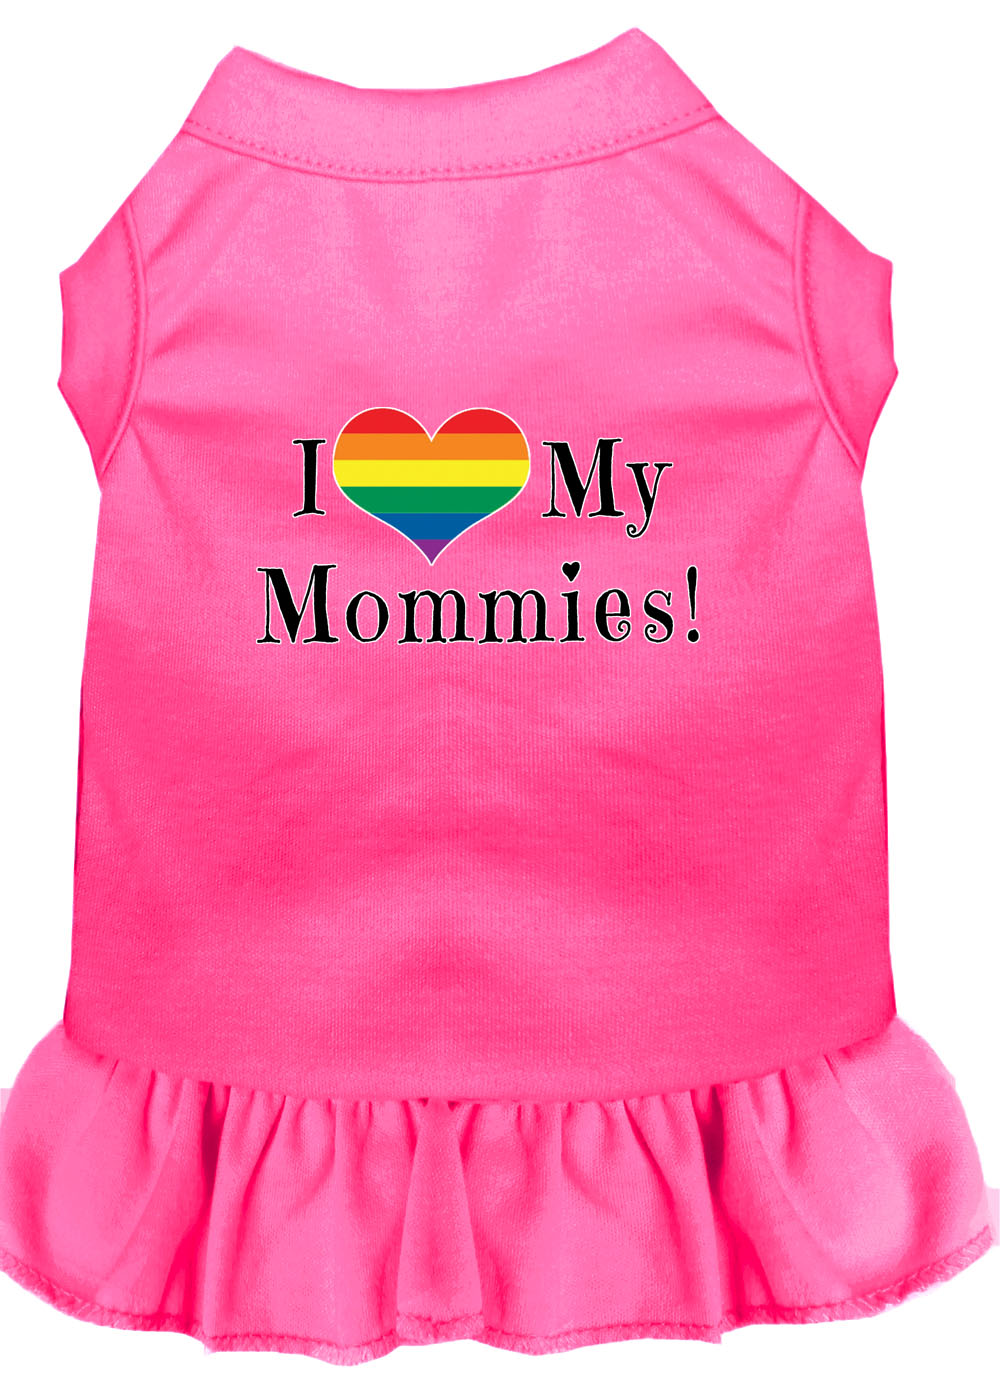 I Heart my Mommies Screen Print Dog Dress Bright Pink Lg